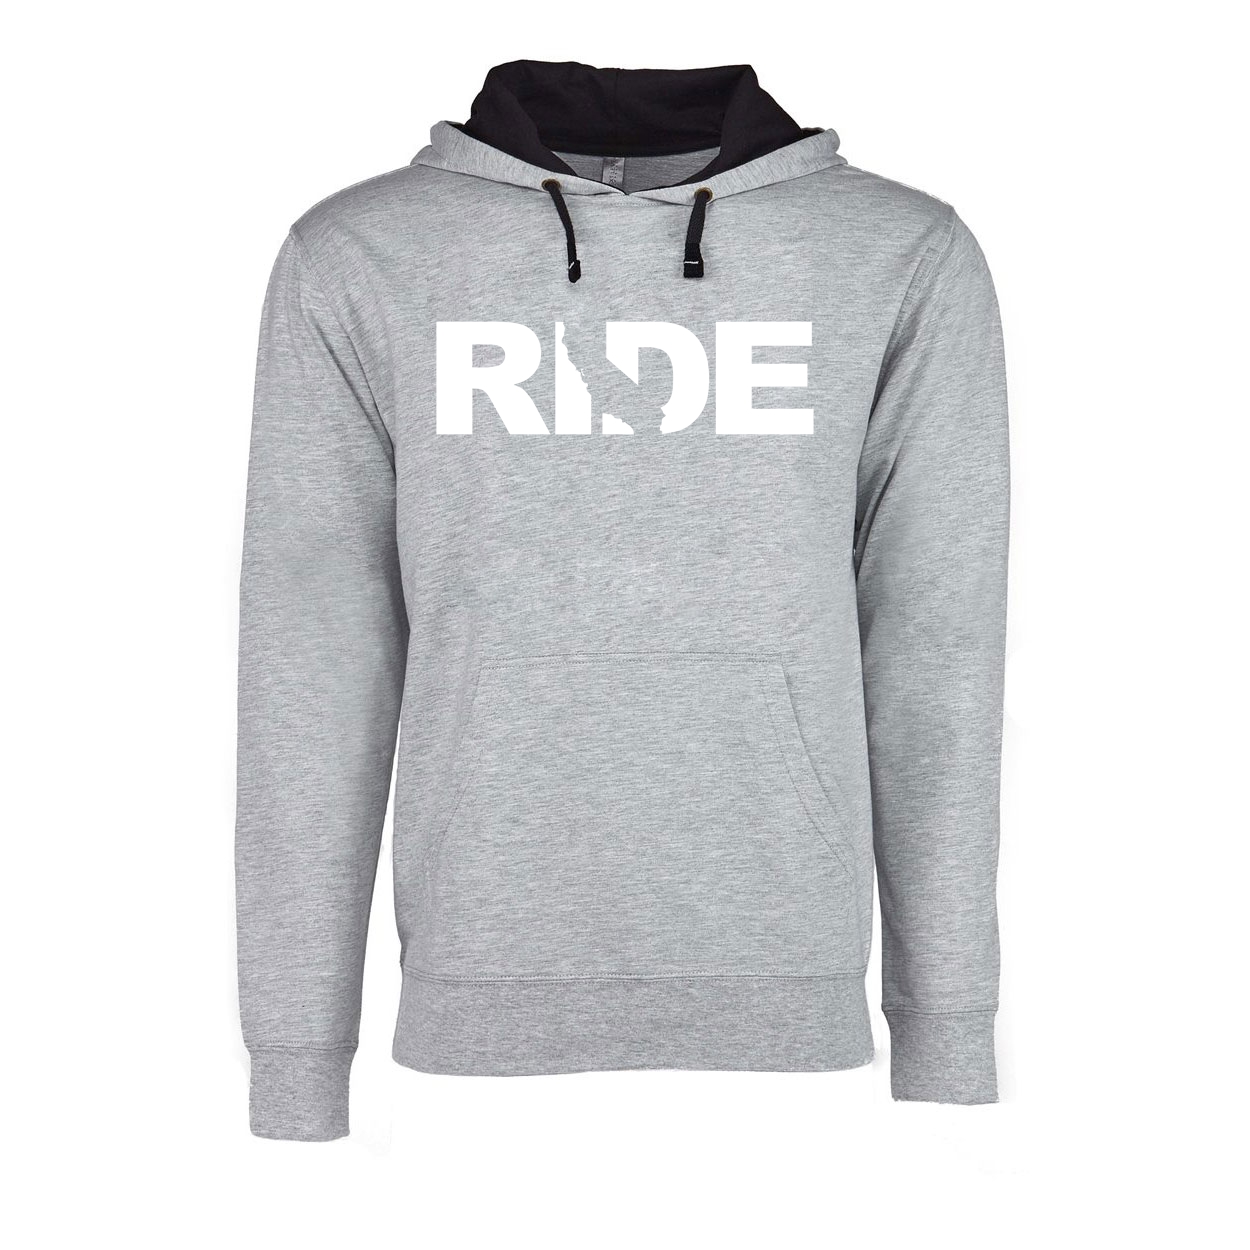 Ride California Classic Lightweight Sweatshirt Heather Gray/Black (White Logo)